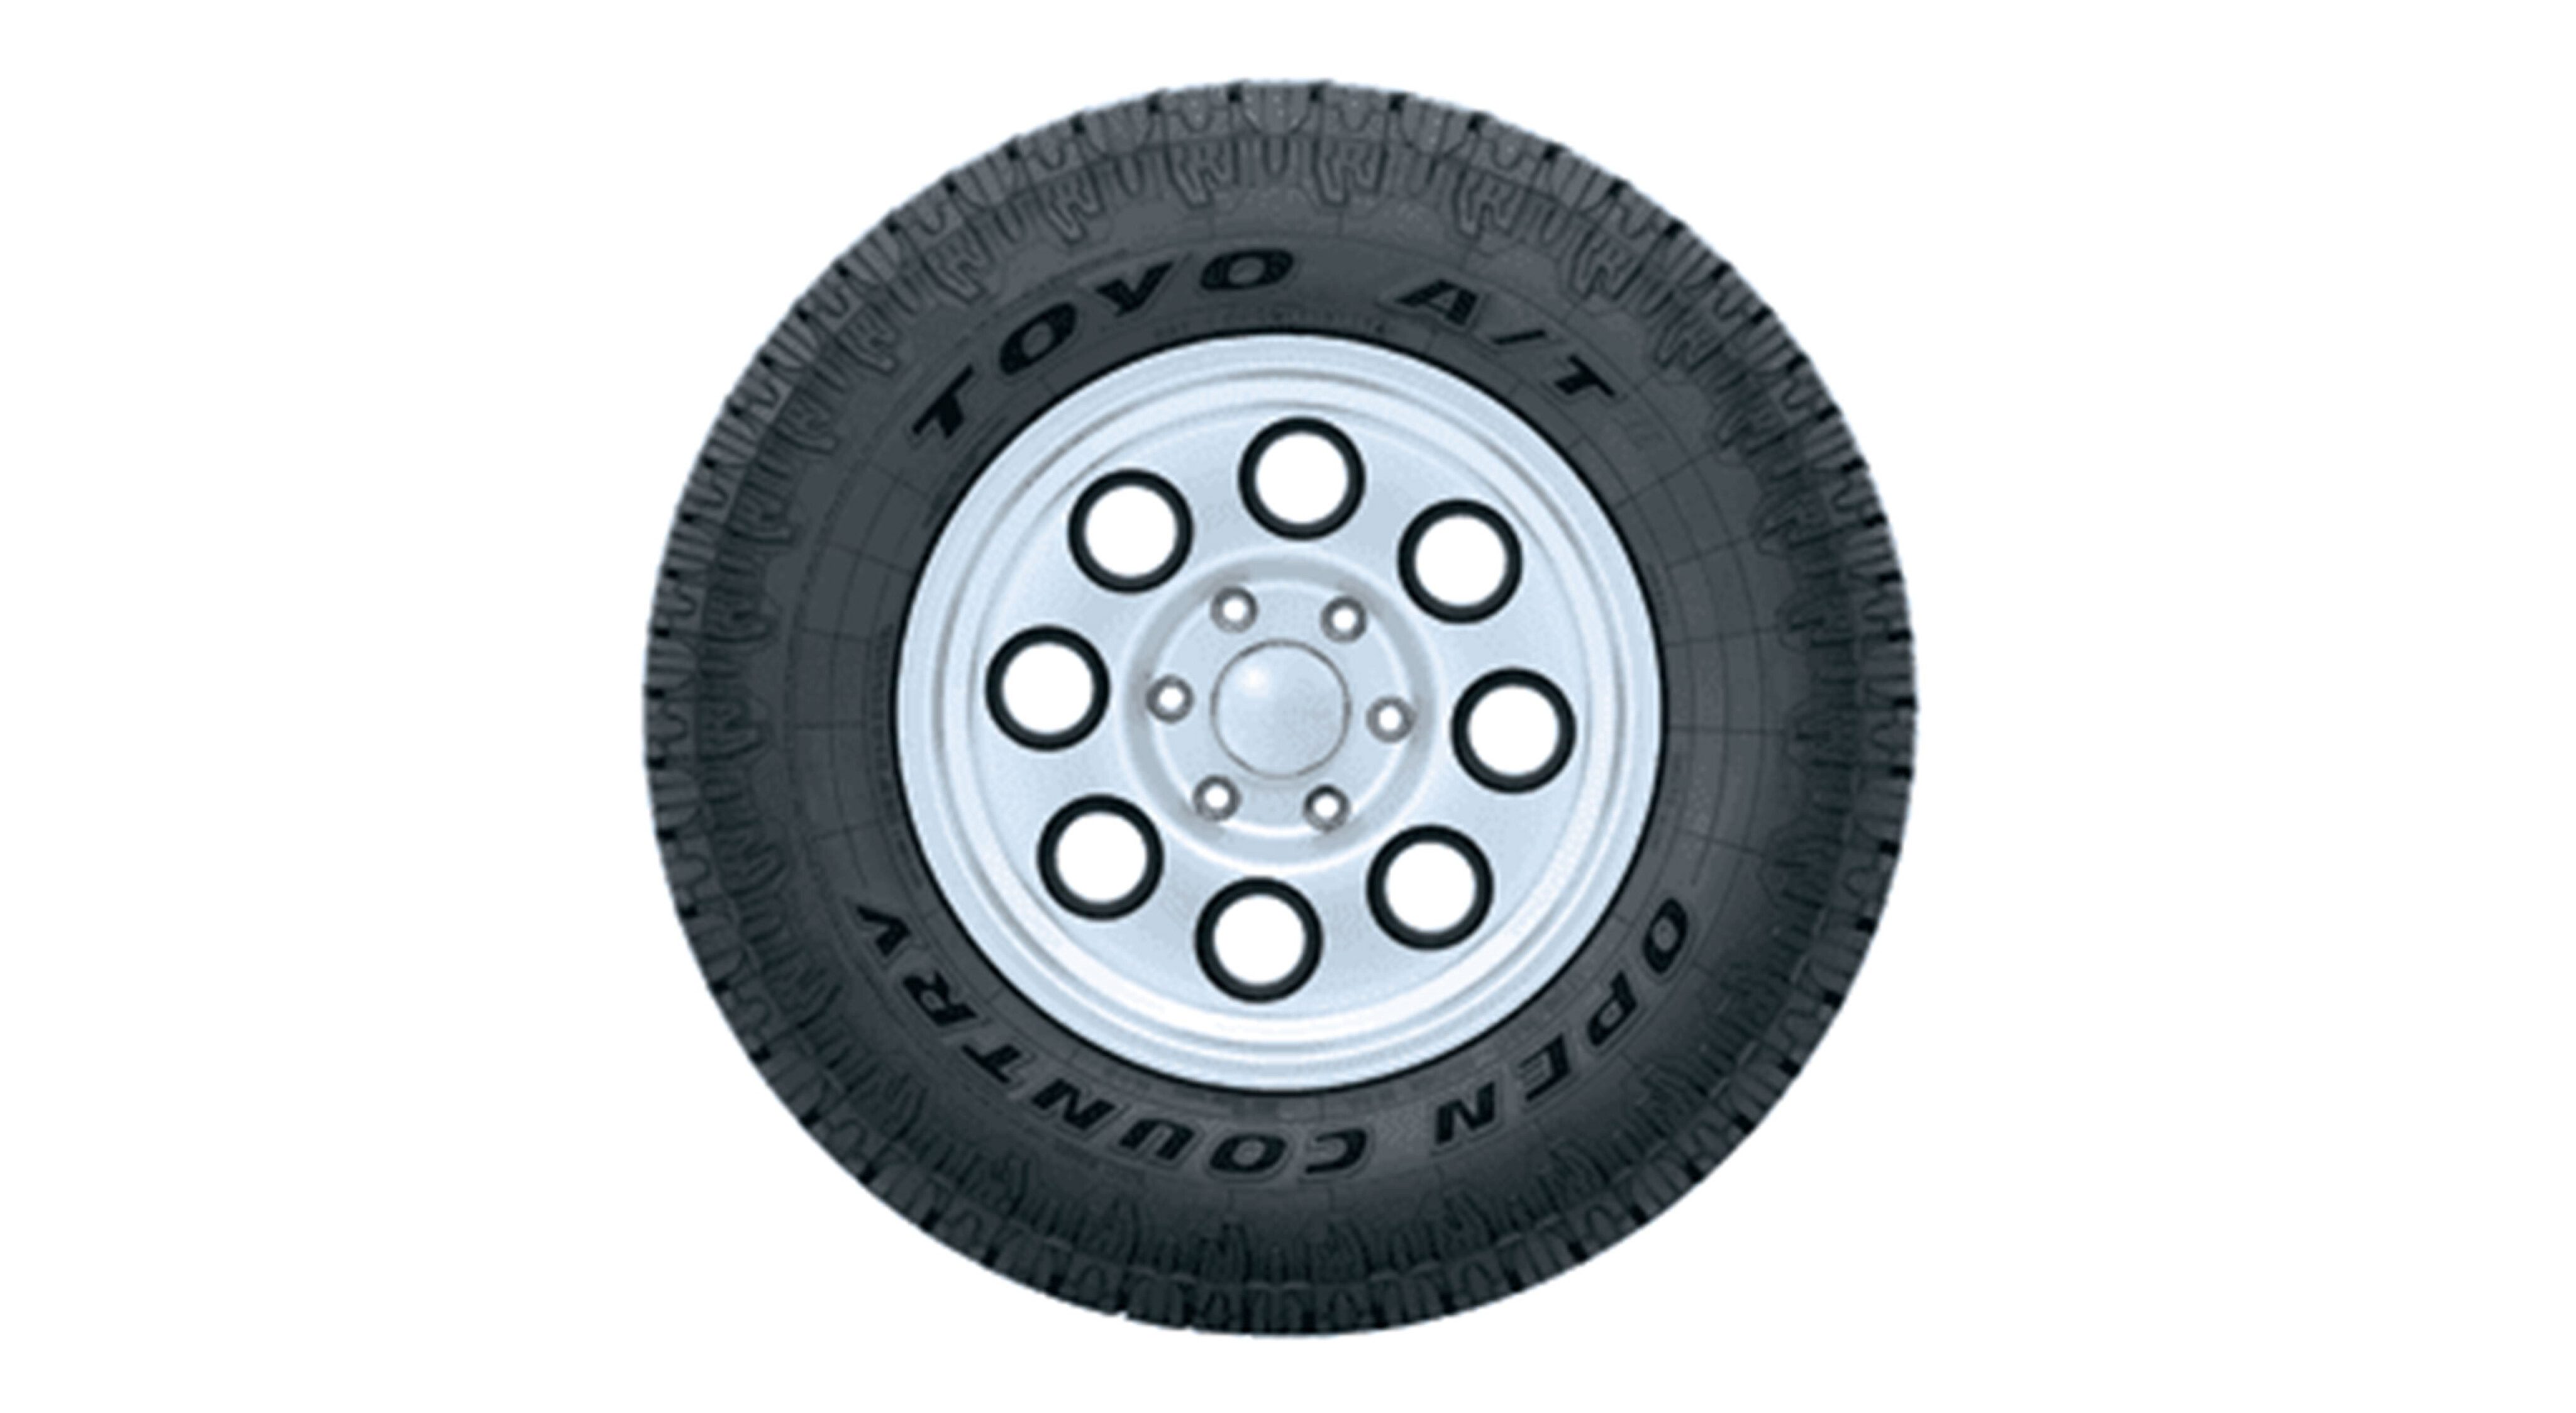 15241240/open country best 4x4 tyre jpg